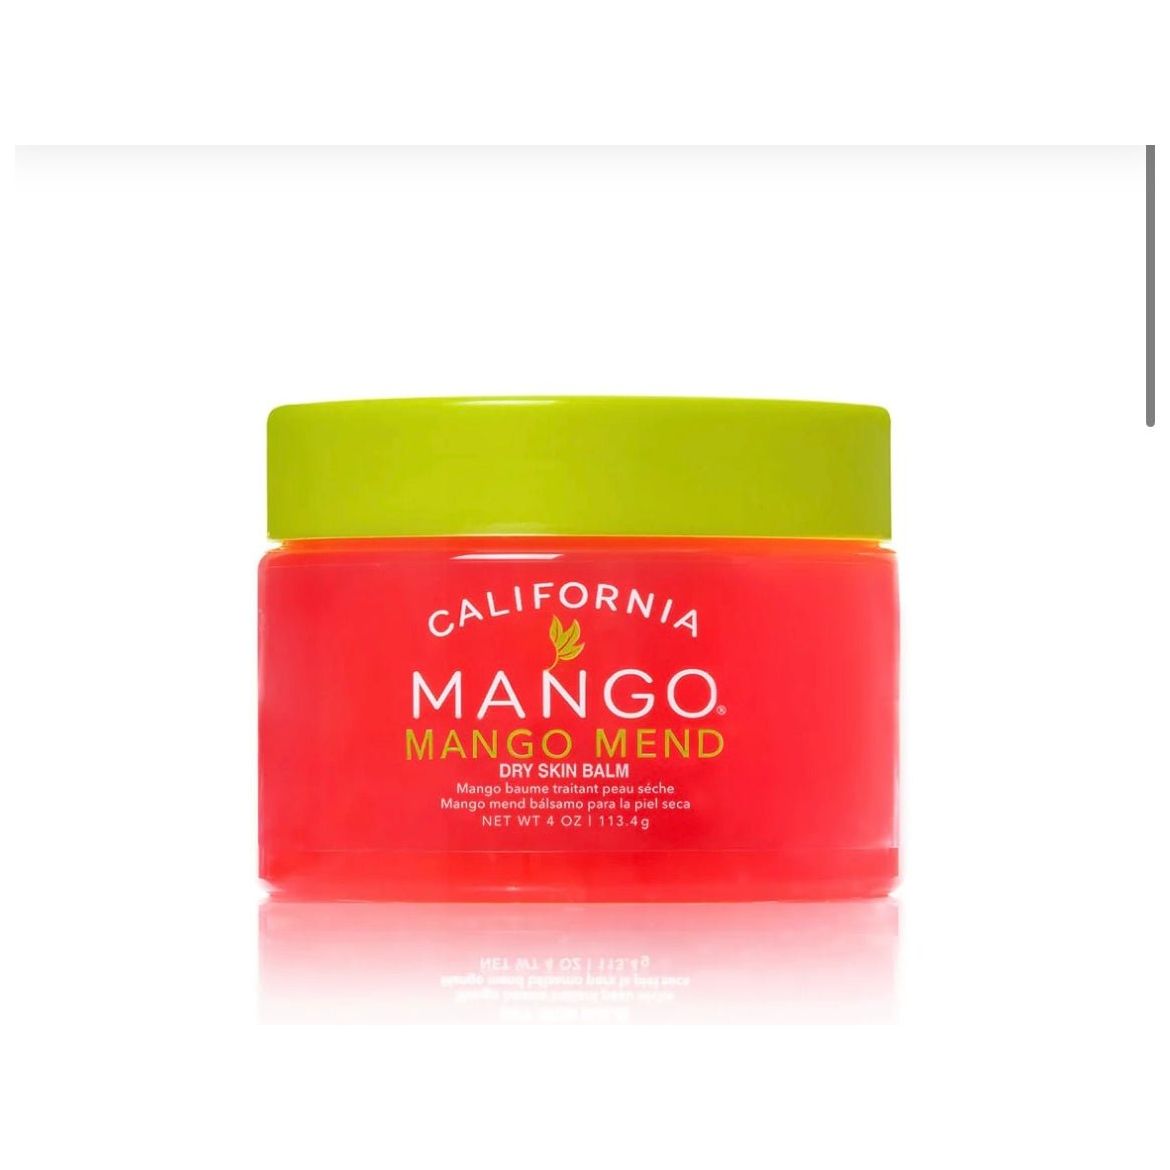 California Mango Mango Mend - Miles and Bishop